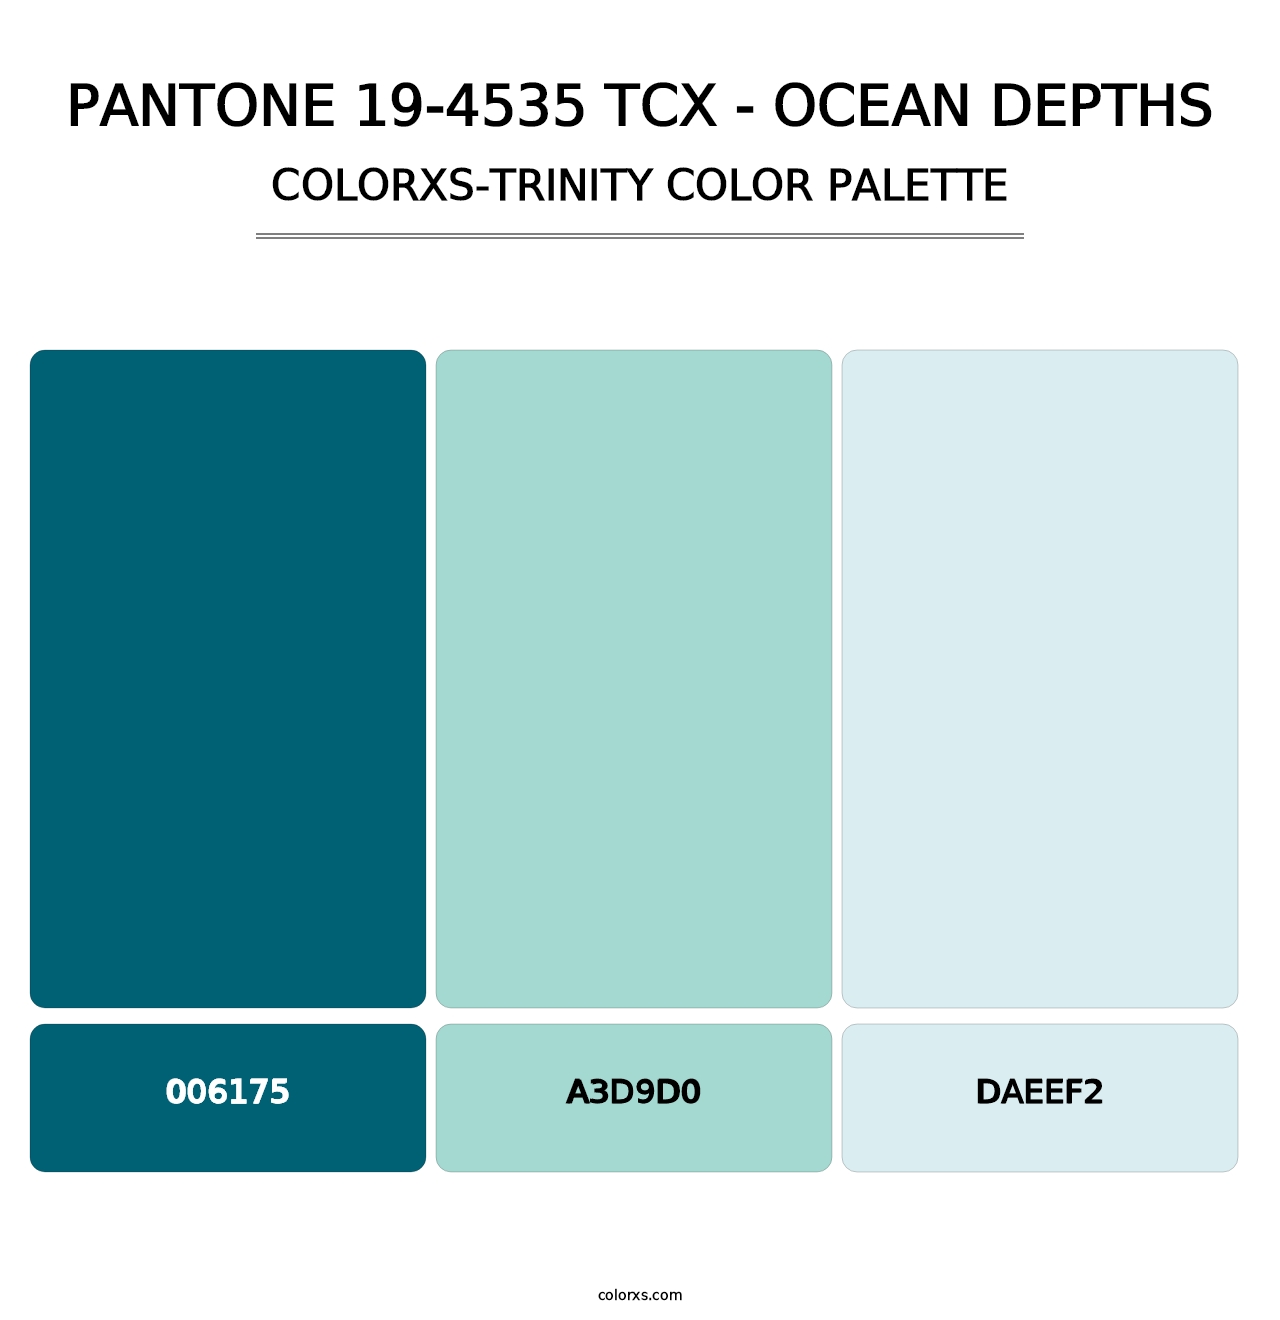 PANTONE 19-4535 TCX - Ocean Depths - Colorxs Trinity Palette